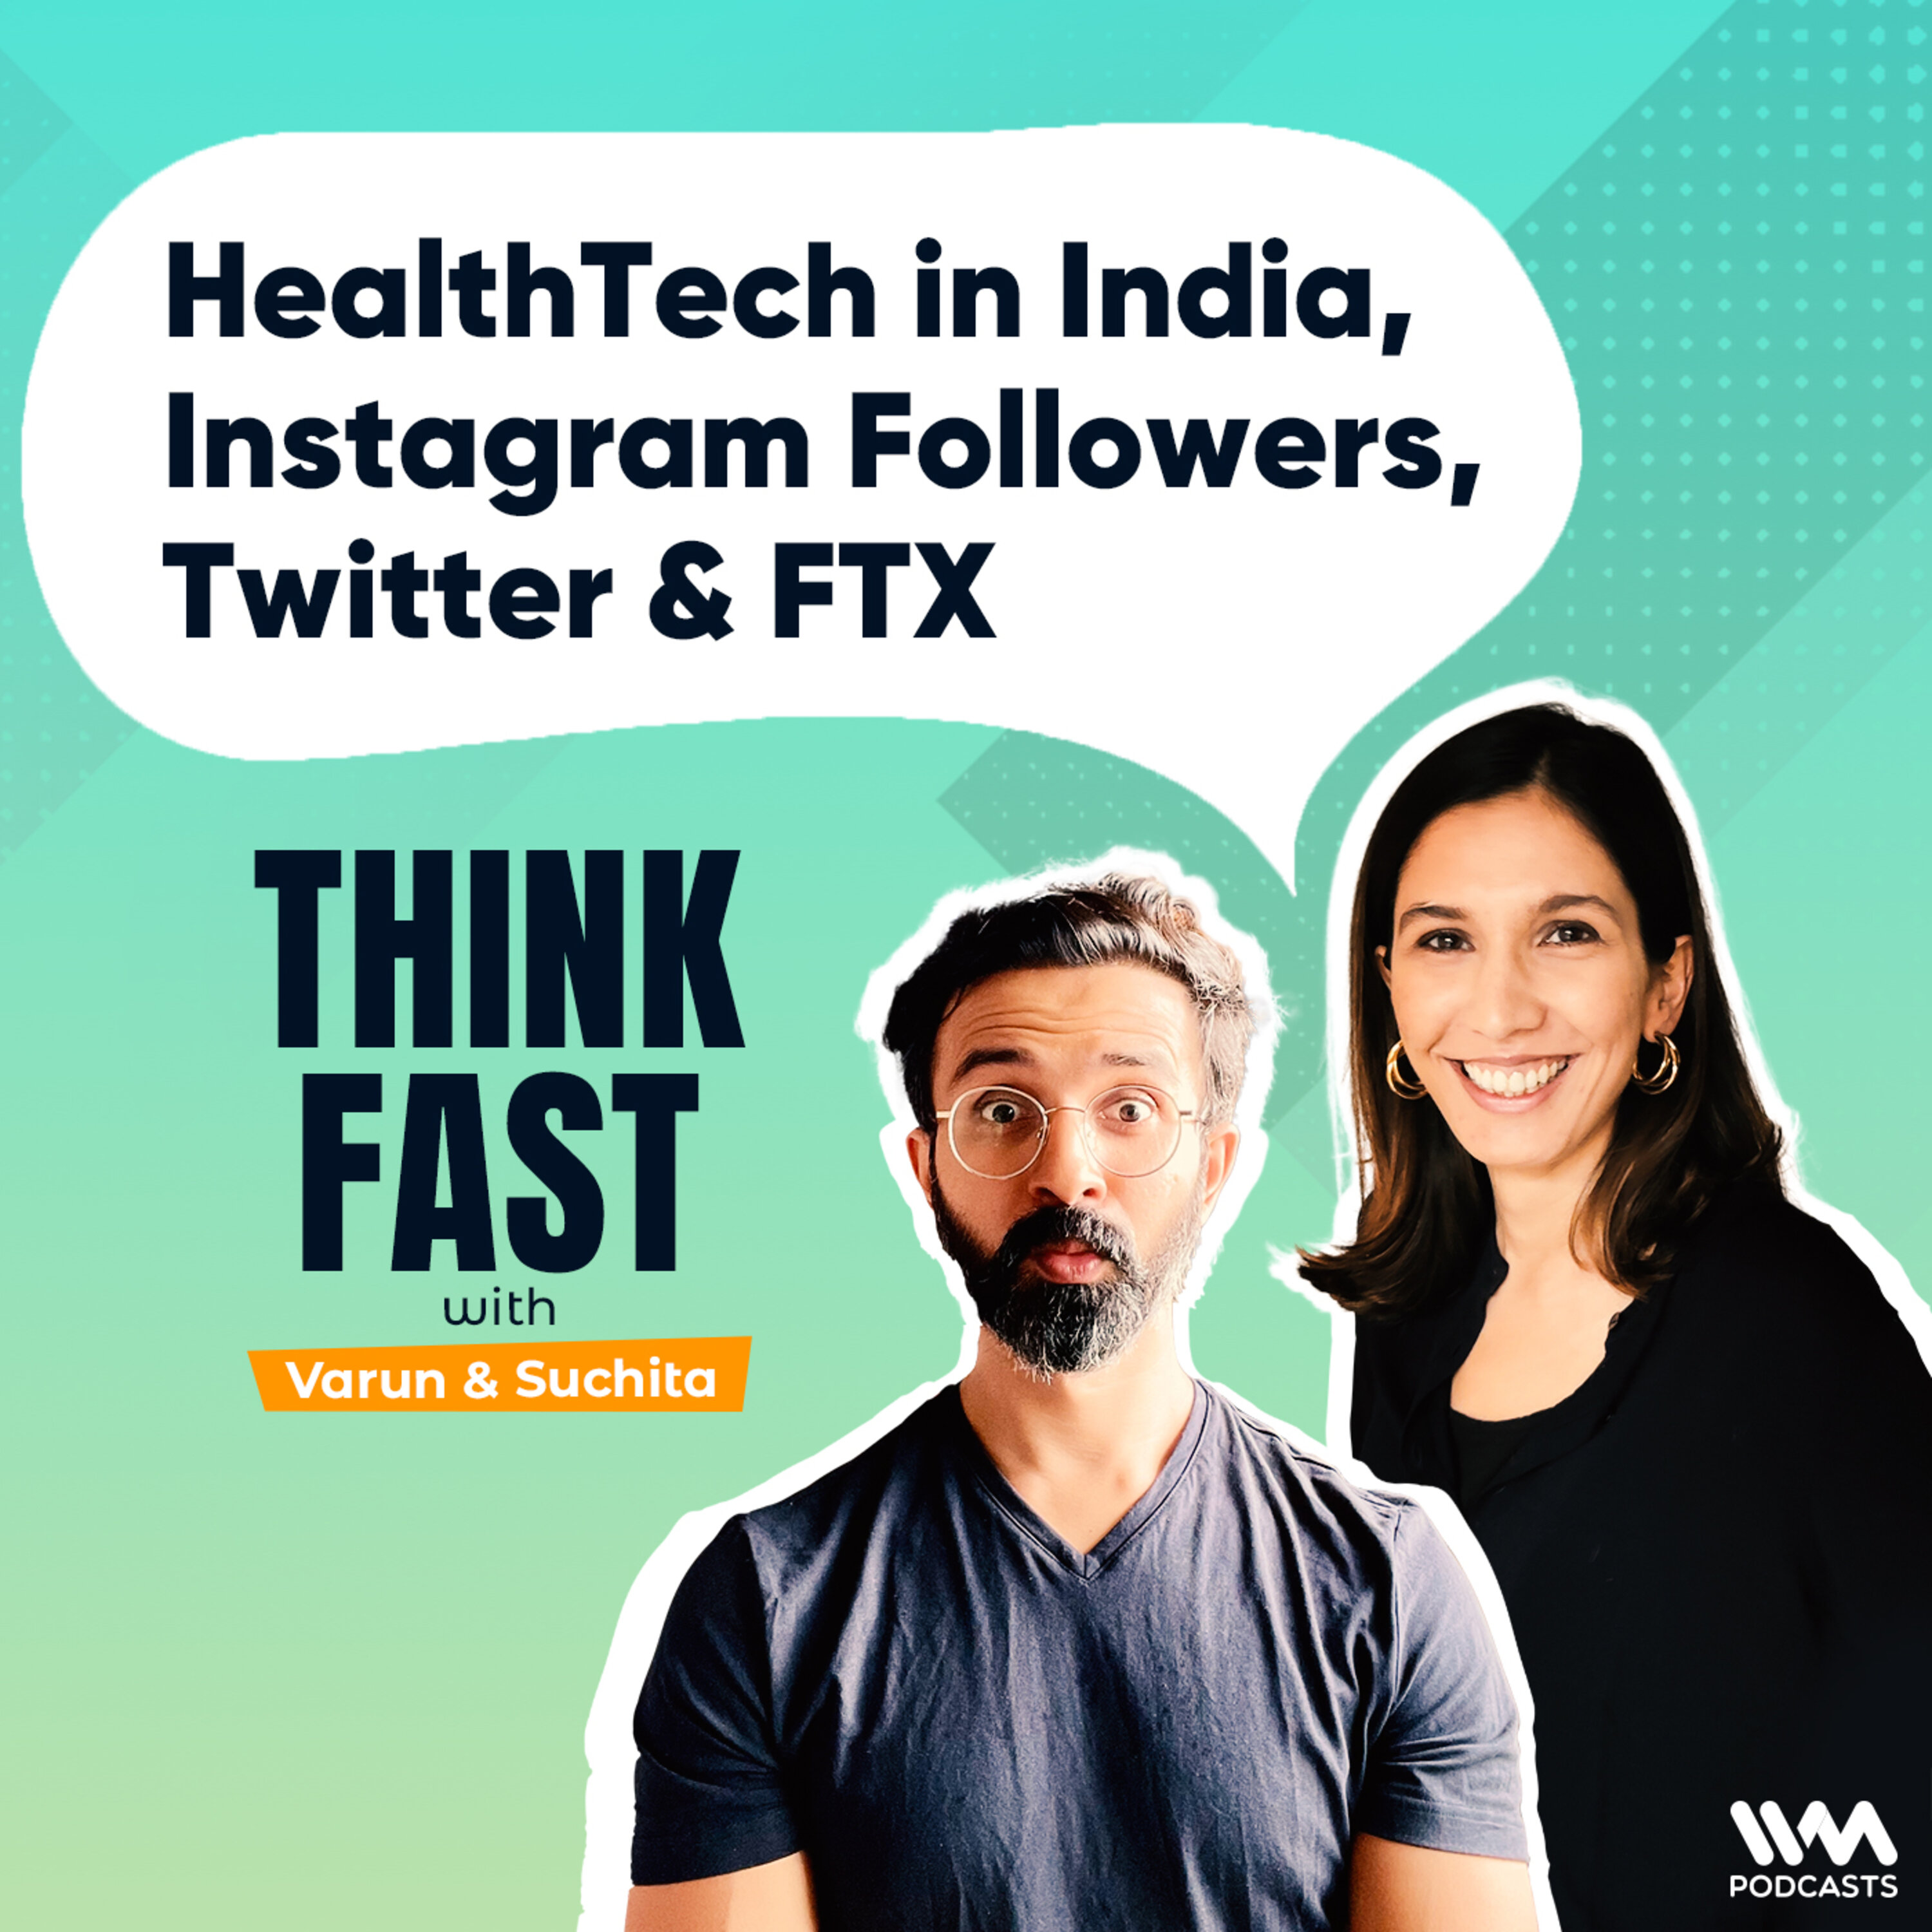 HealthTech in India, Instagram Followers, Twitter & FTX